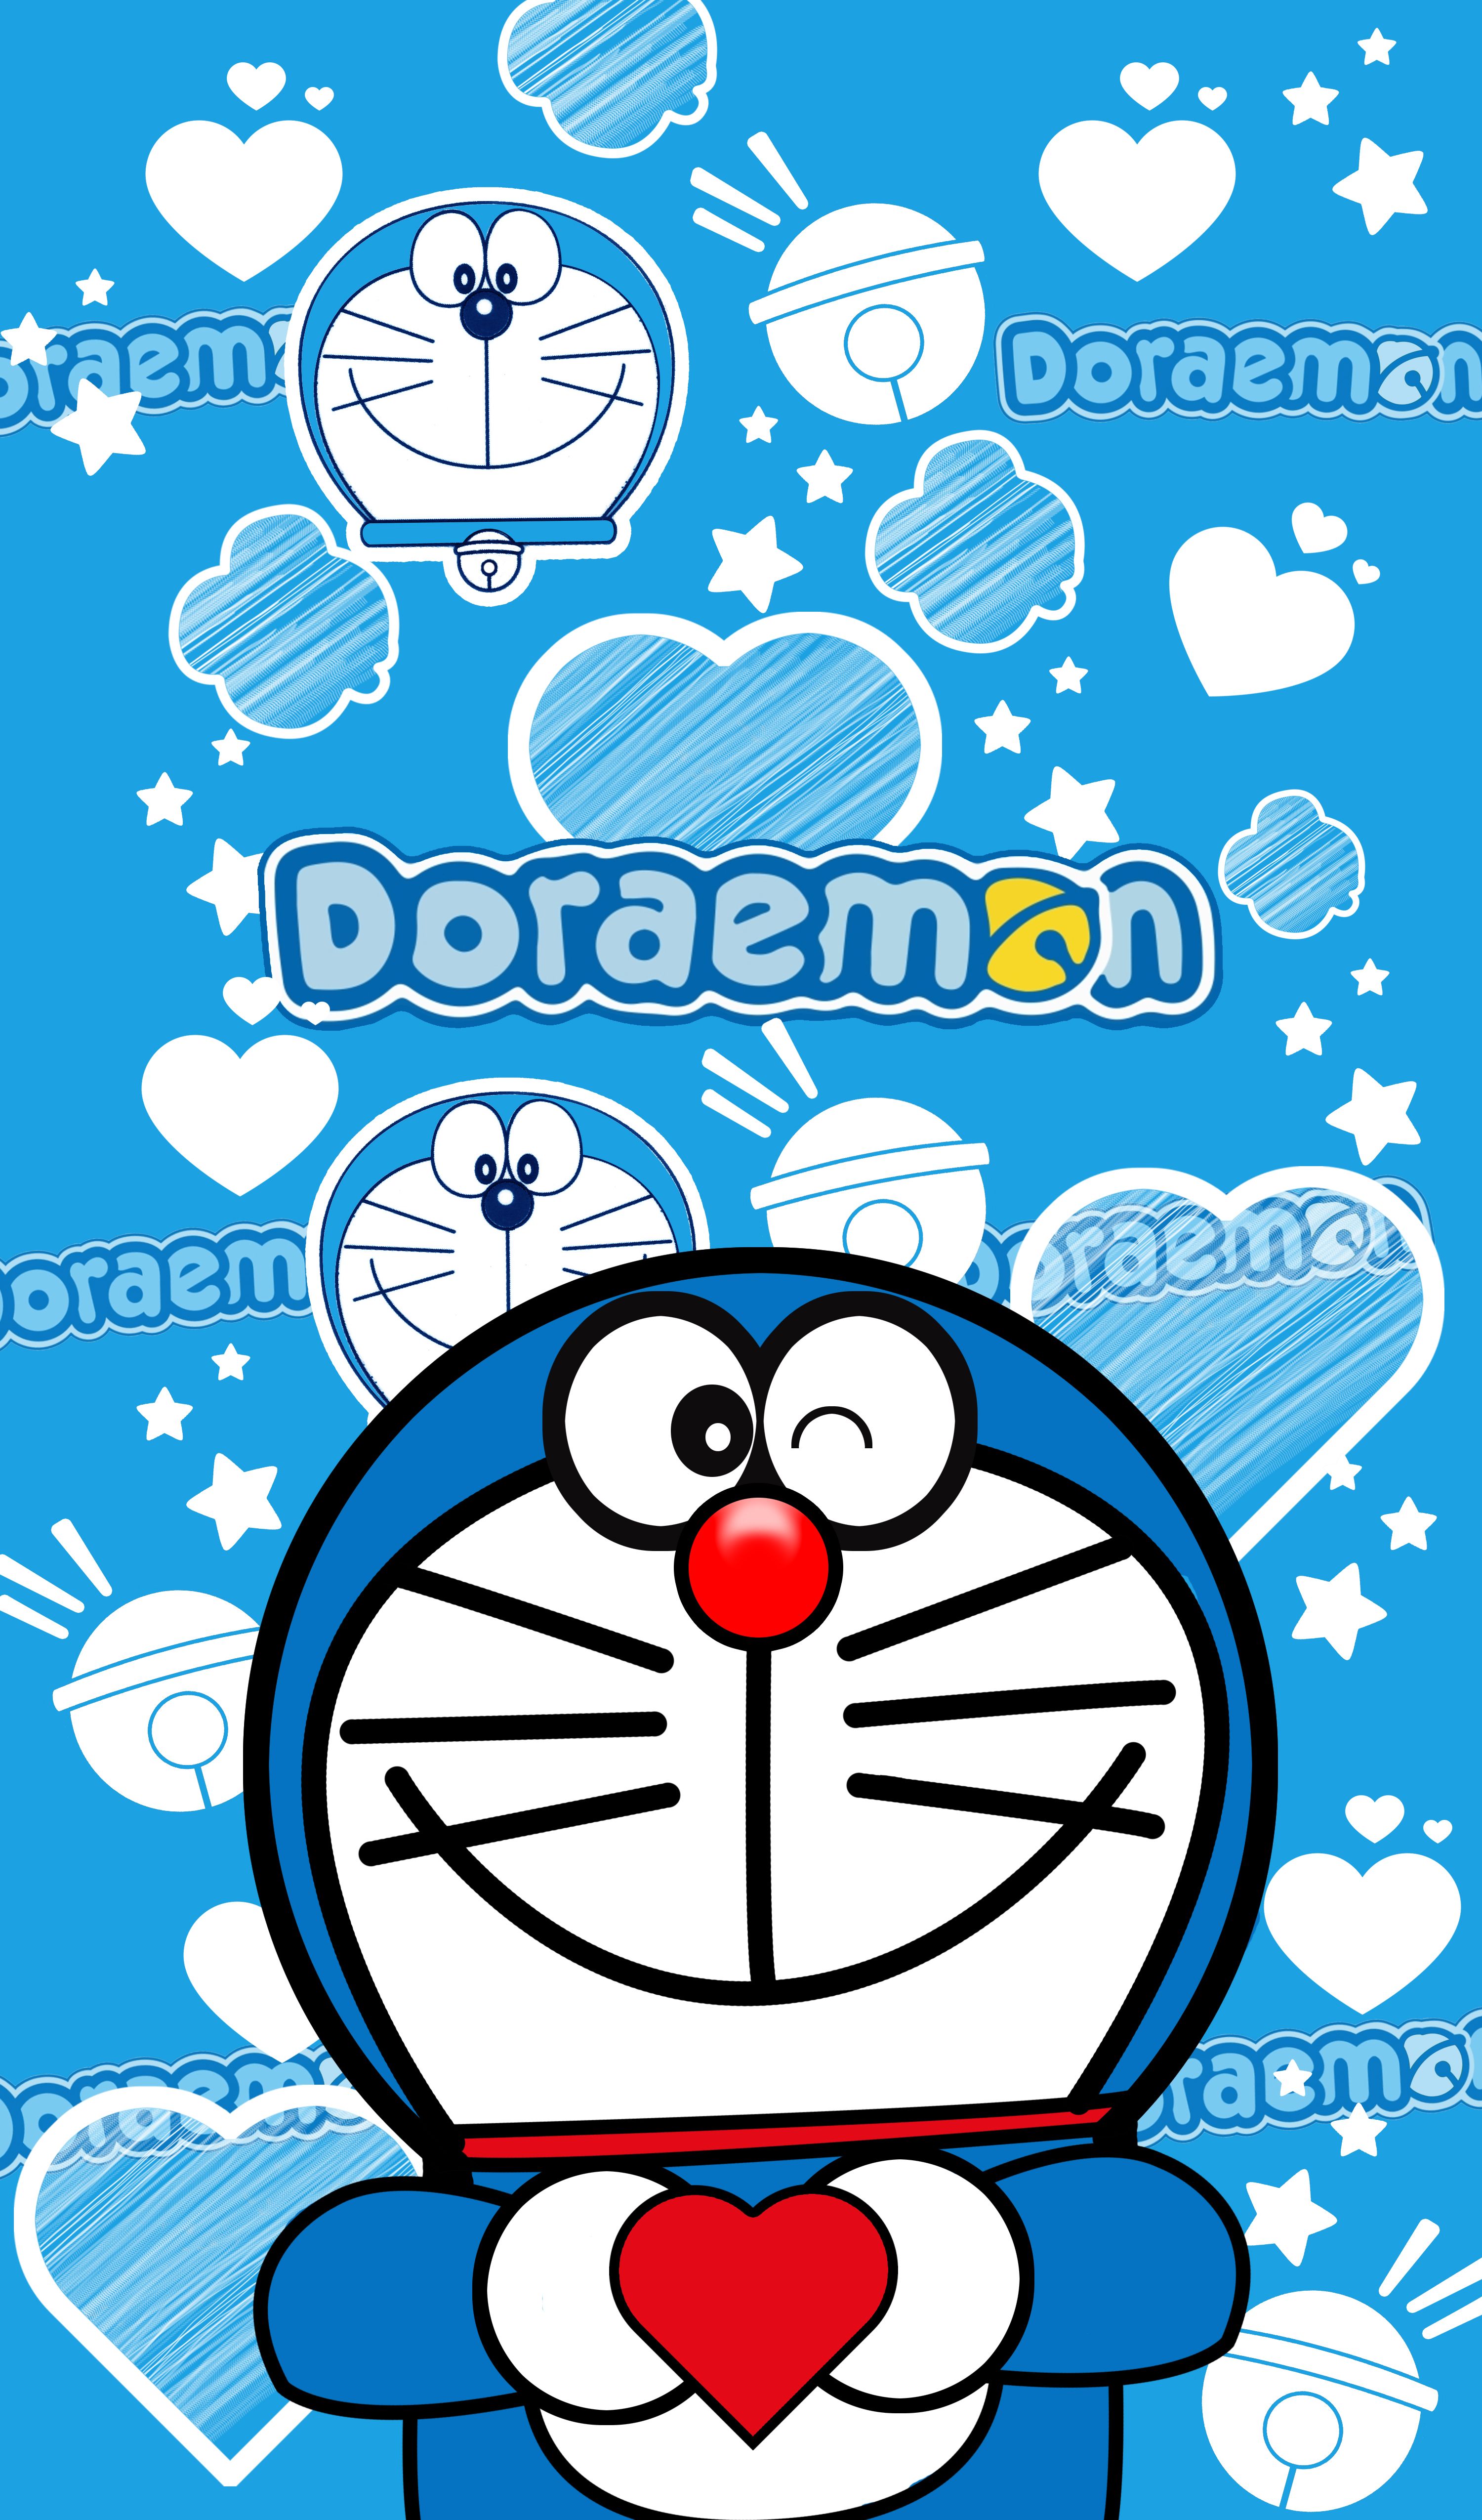 Doraemon wallpaper cartoon kartu lucu buku mewarnai kartu